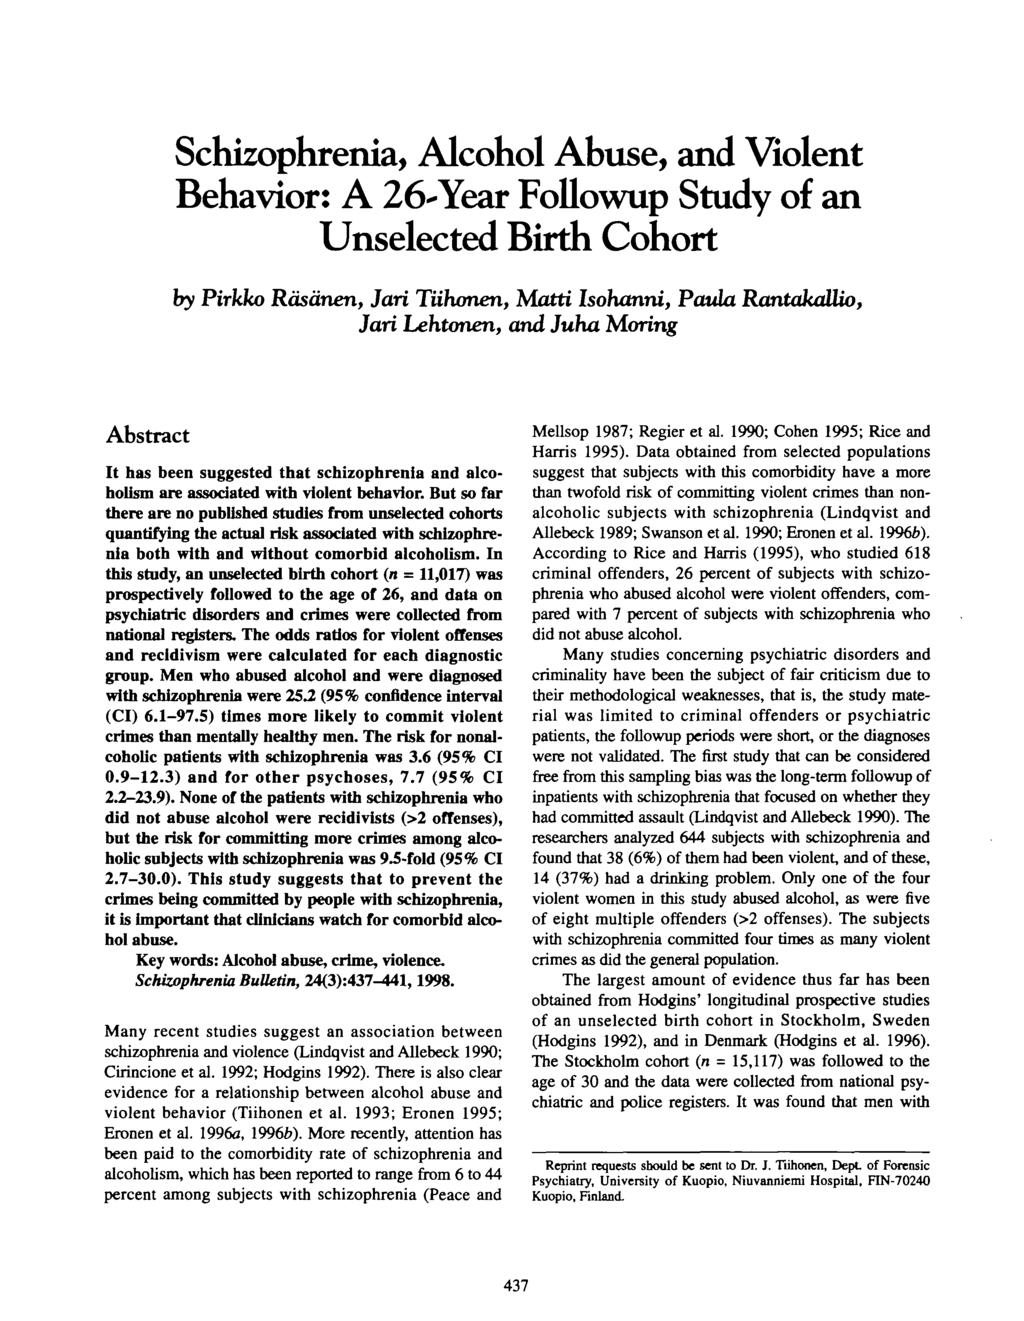 Schizophrenia, Alcohol Abuse, and Violent Behavior: A 26-Year Followup Study of an Unselected Birth Cohort by Pirkko Rasanen, Jari Tiihonen, Matti Isohanni, Paula RantakaUio, Jari Lehtonen, and Juha